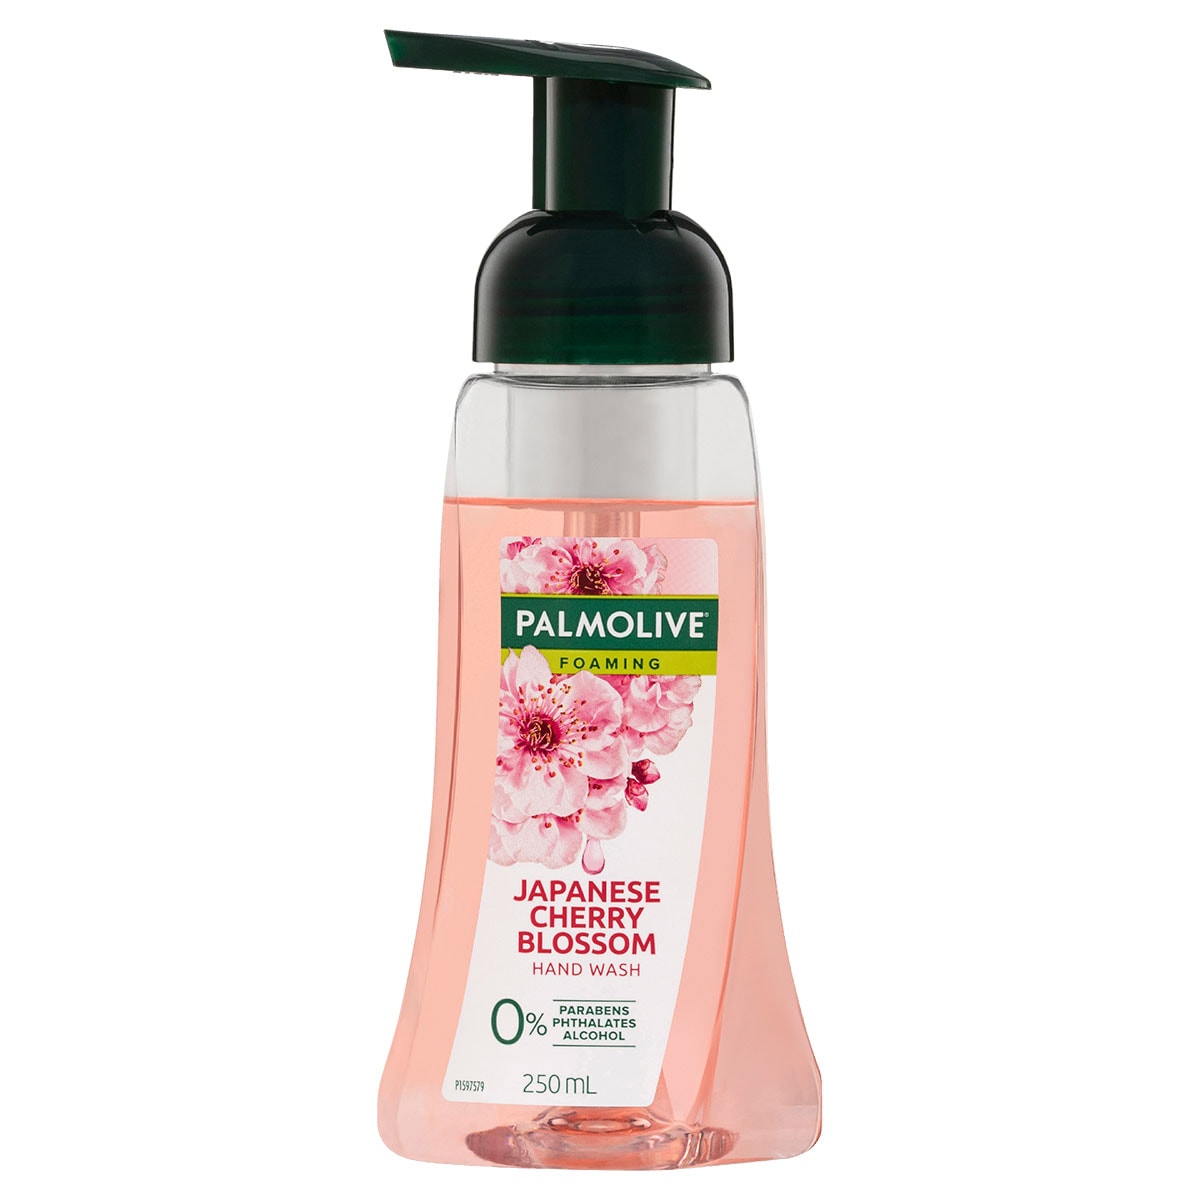 Palmolive Foaming Hand Wash Cherry Blossom 250ml